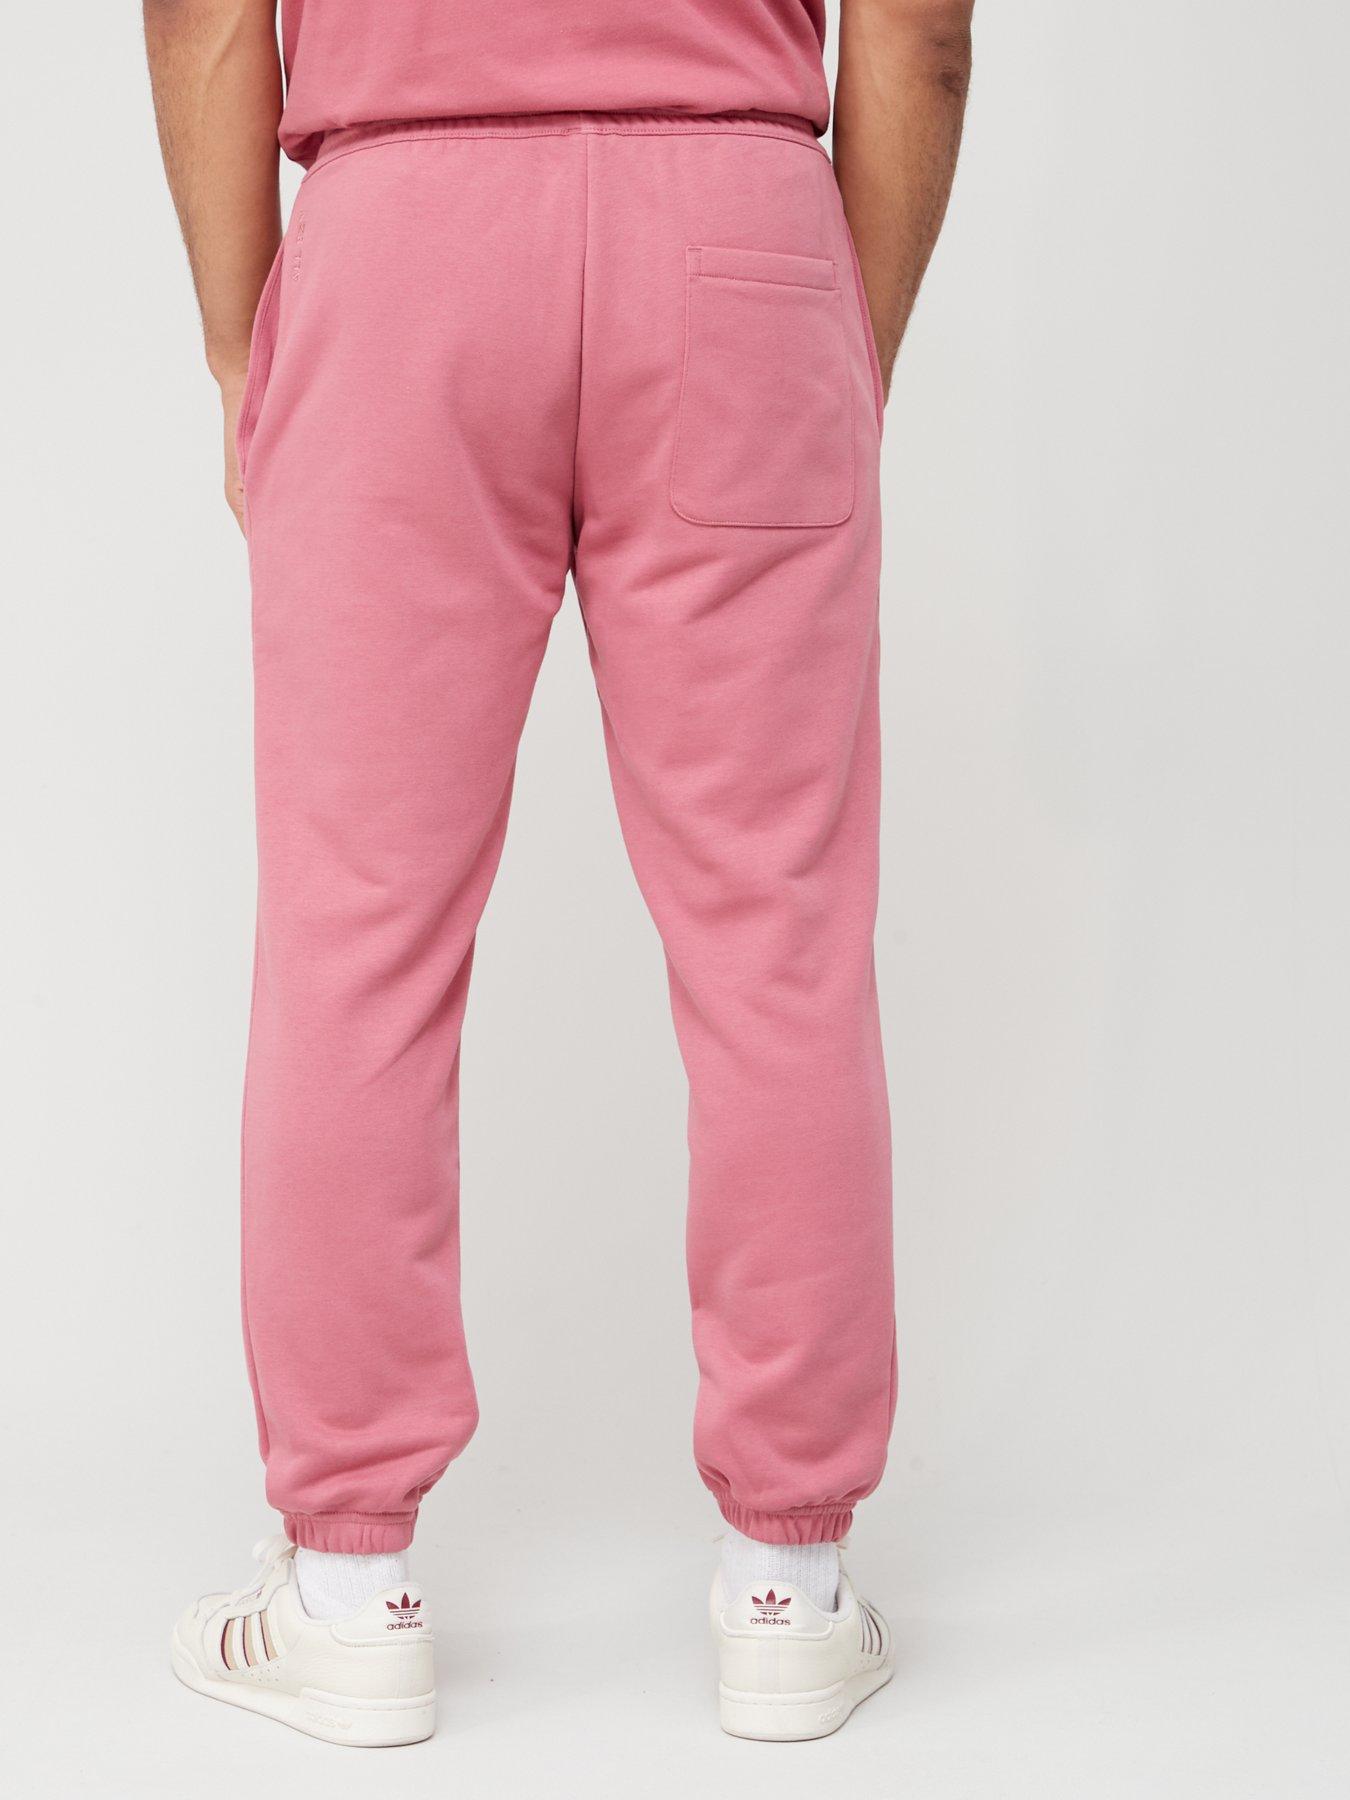  Pink - Men's Athletic Pants / Men's Activewear